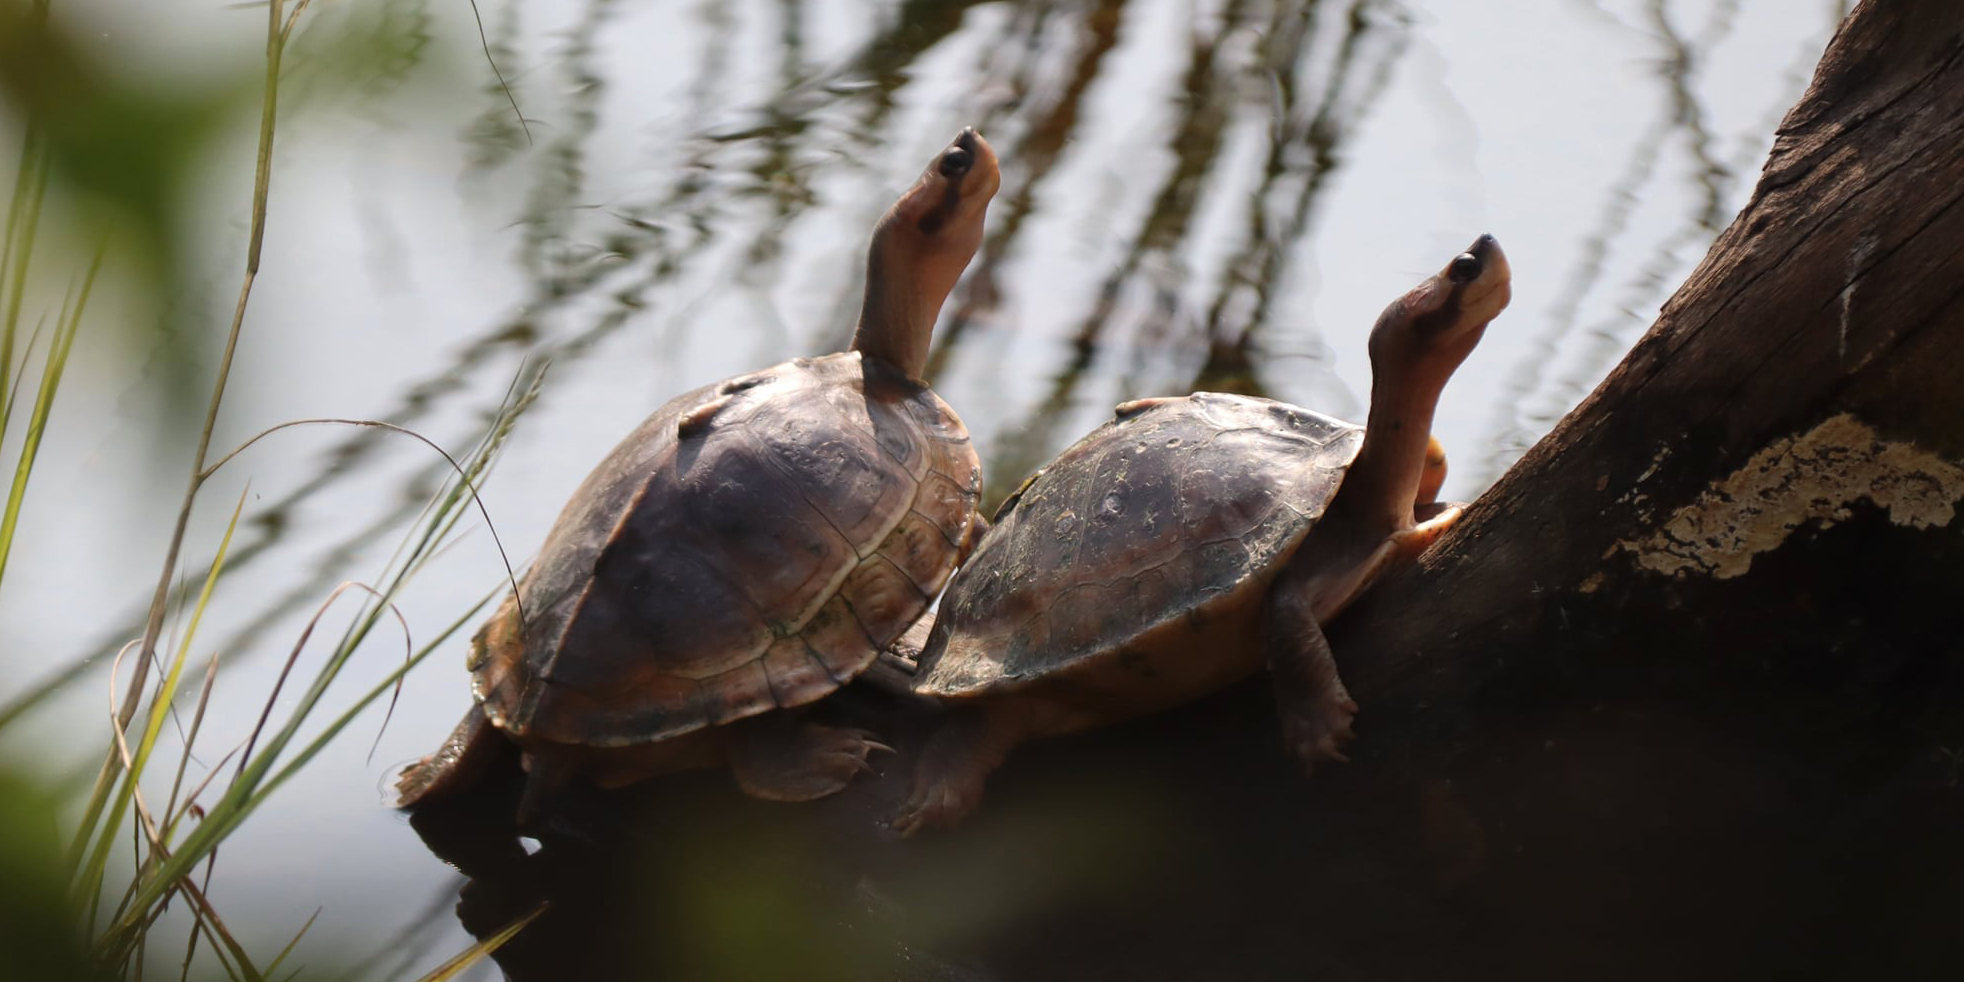 Turtles on the verge of extinction